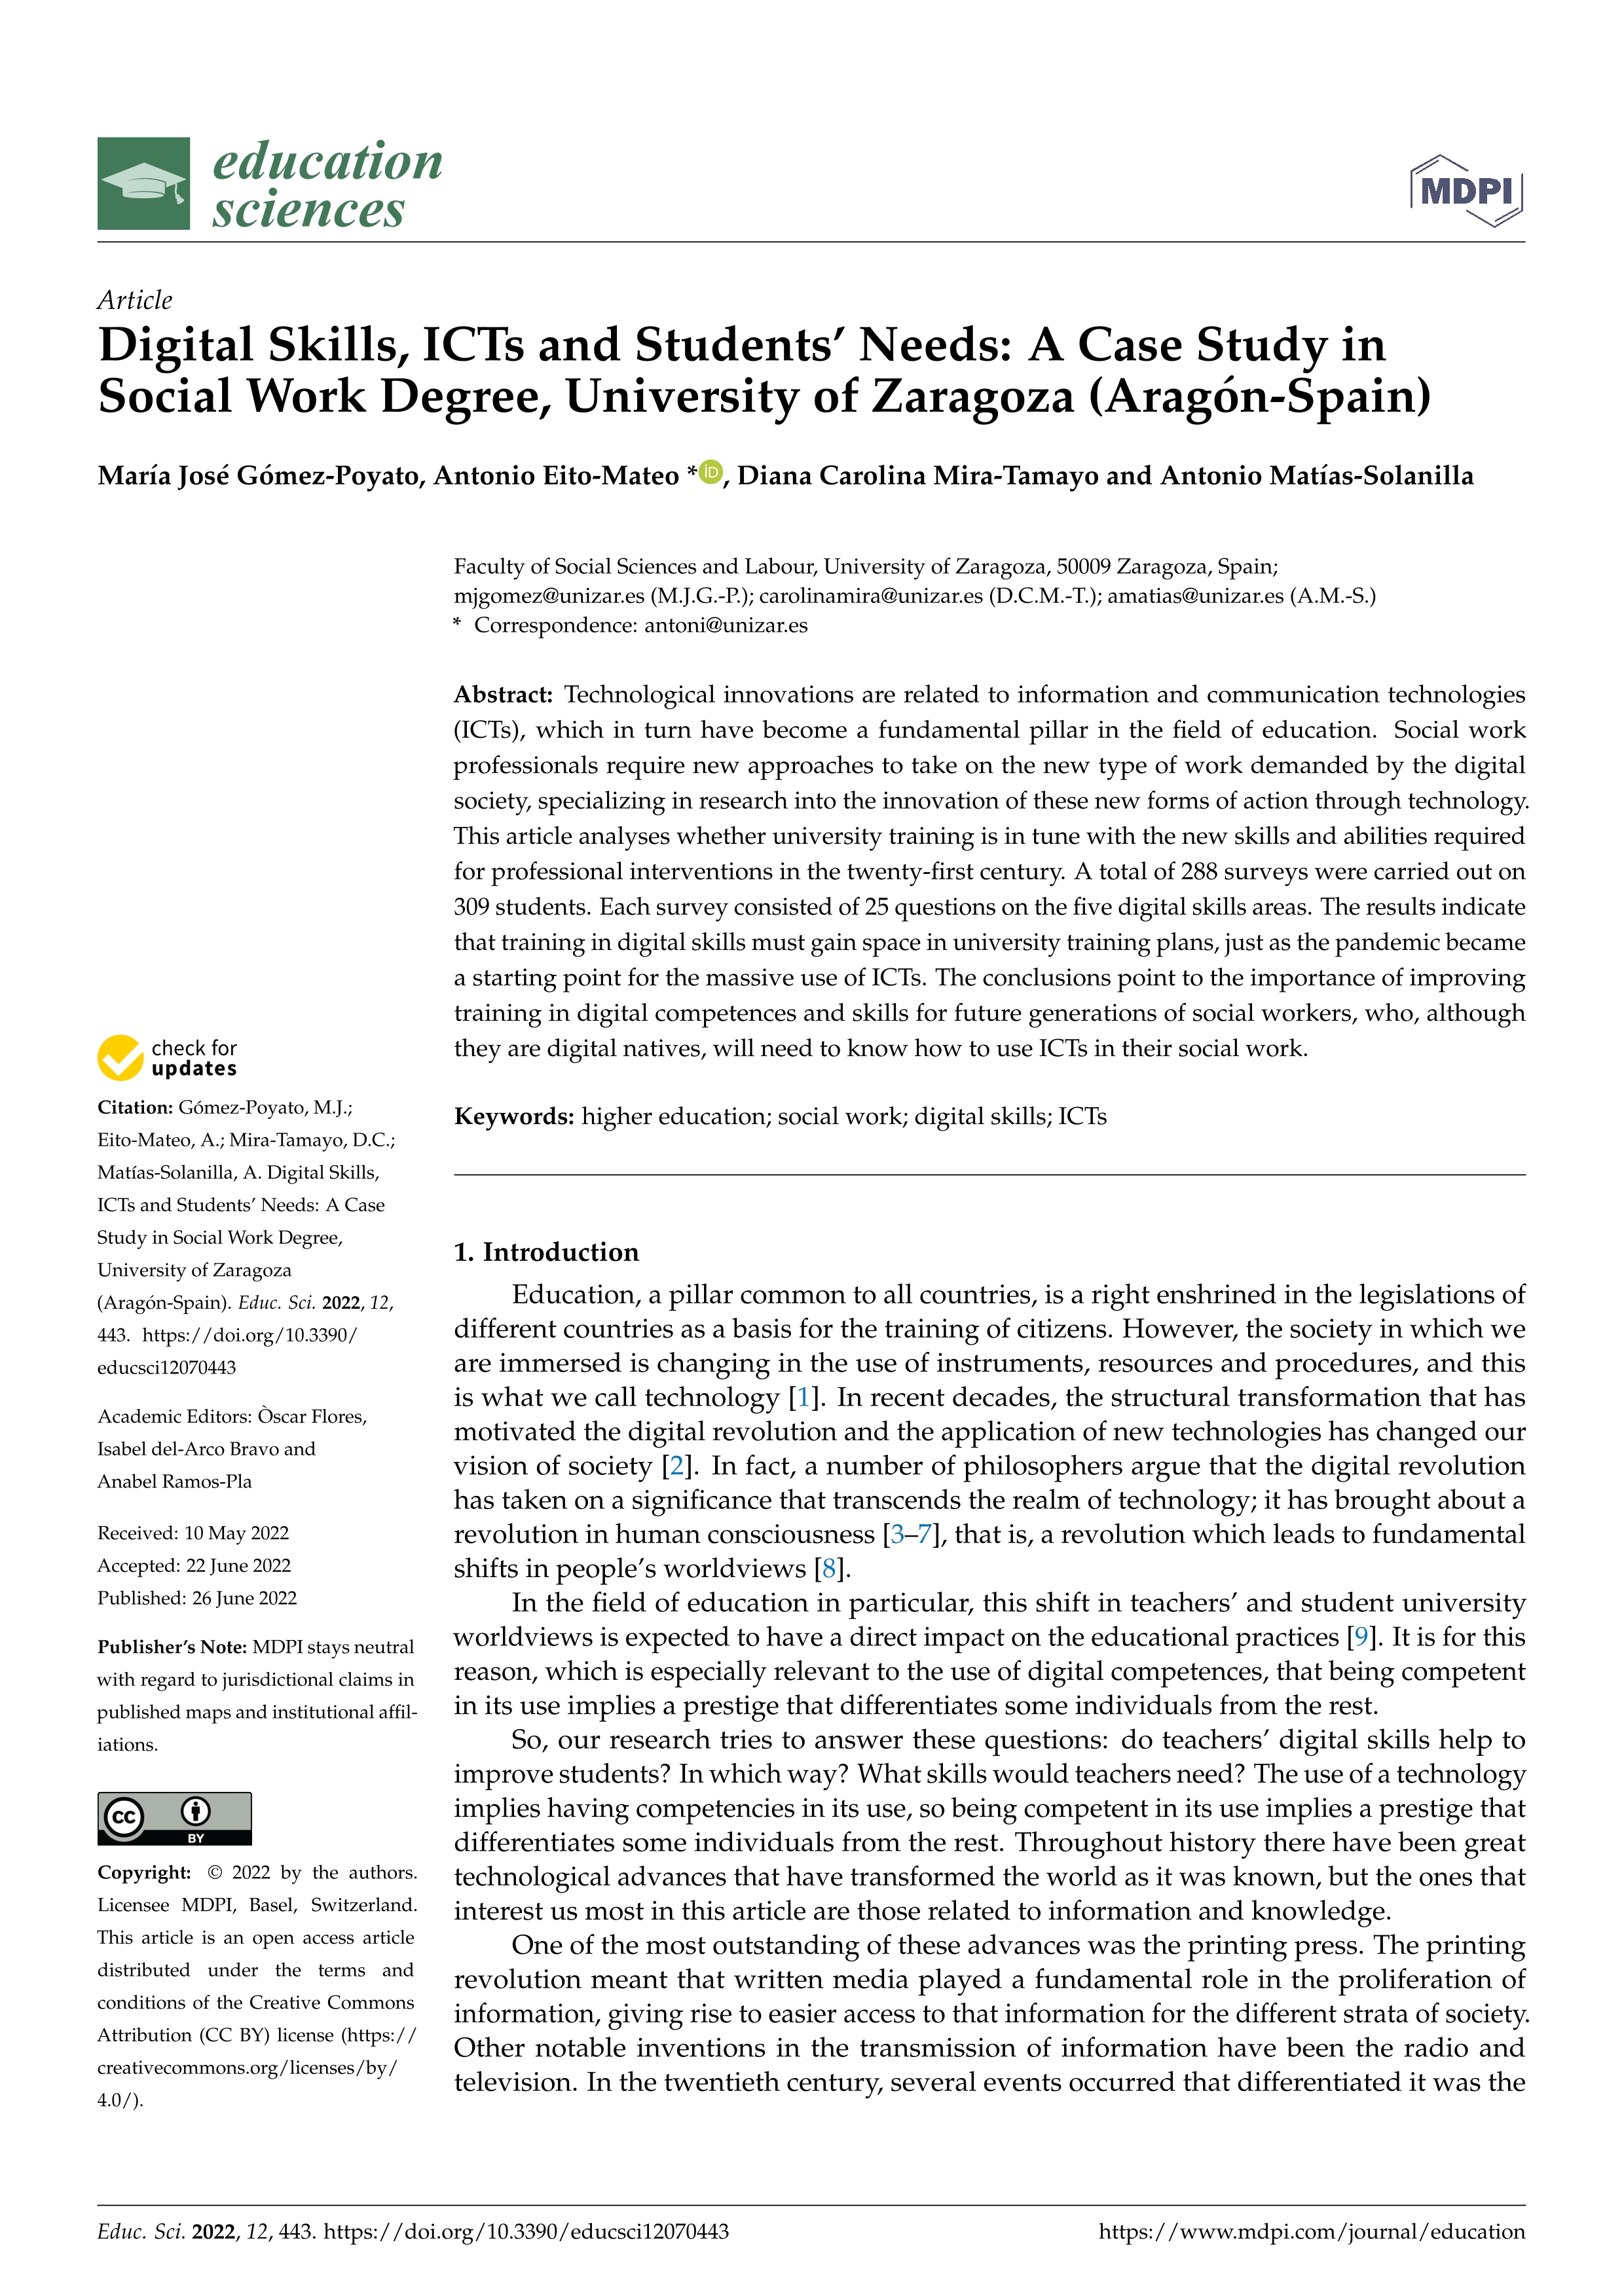 Digital skills, ICTs and students’ needs: a case study in social work degree, University of Zaragoza (Aragón-Spain)